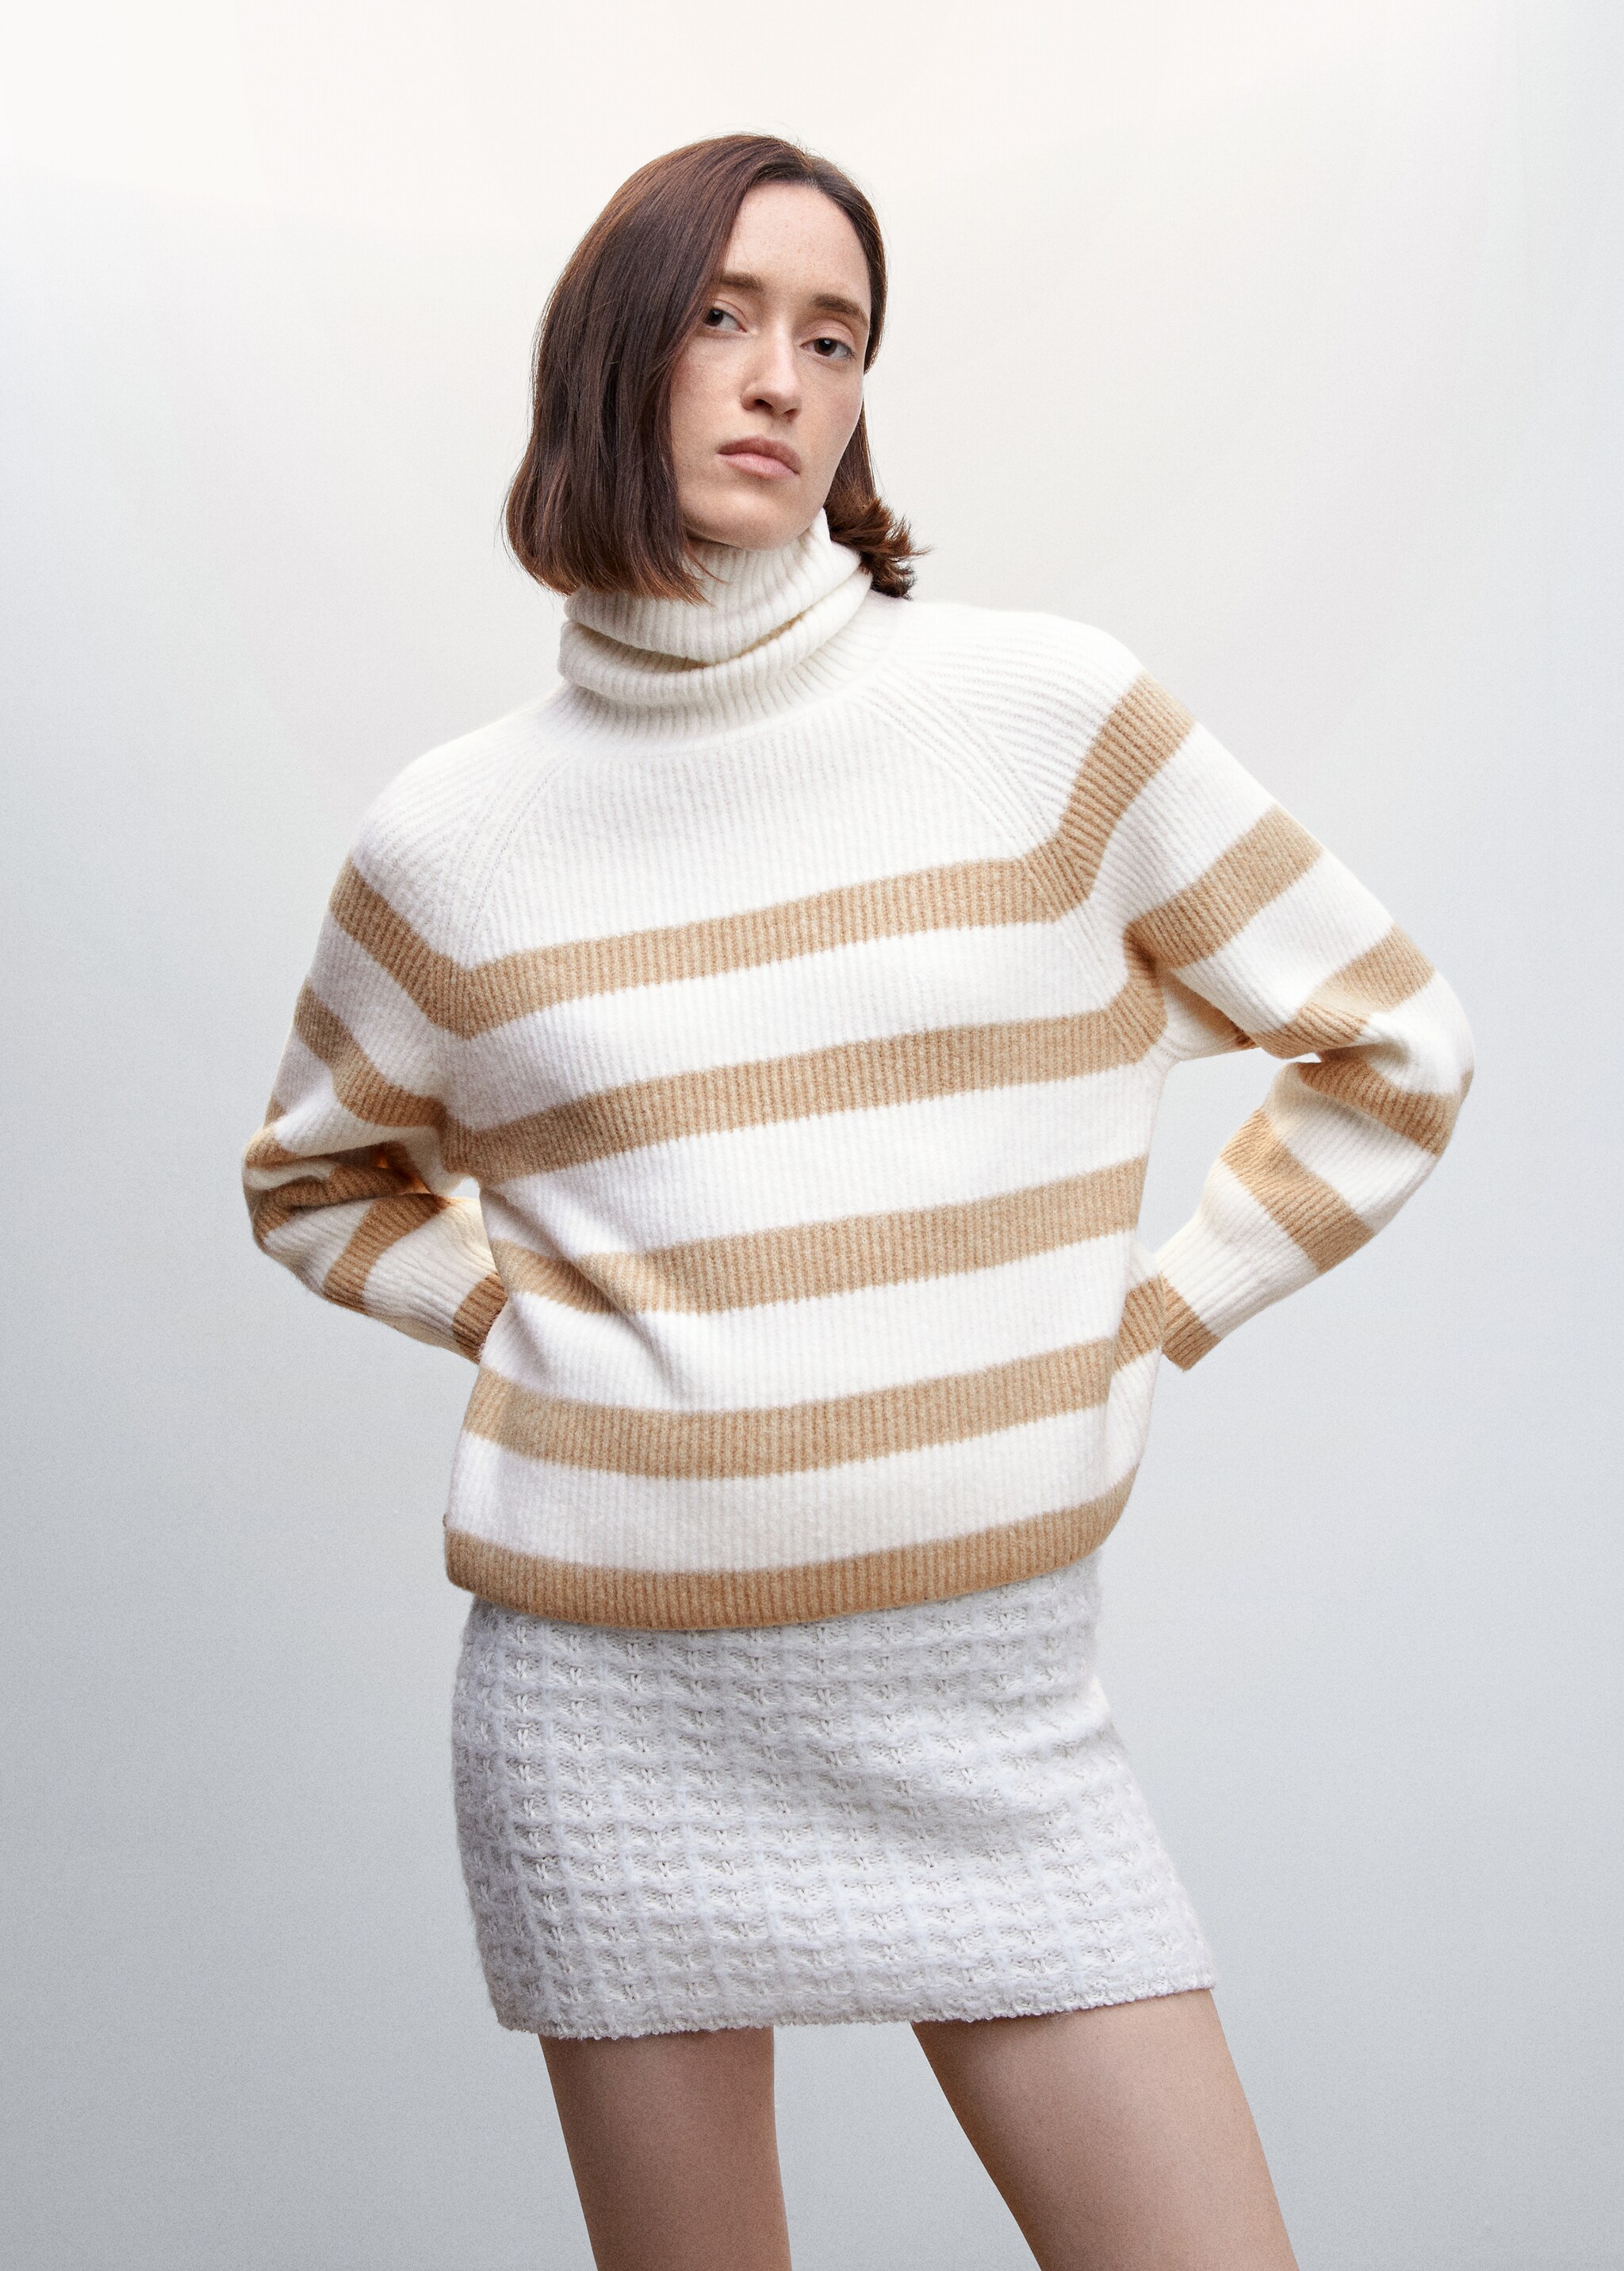 Striped turtleneck sweater - Medium plane